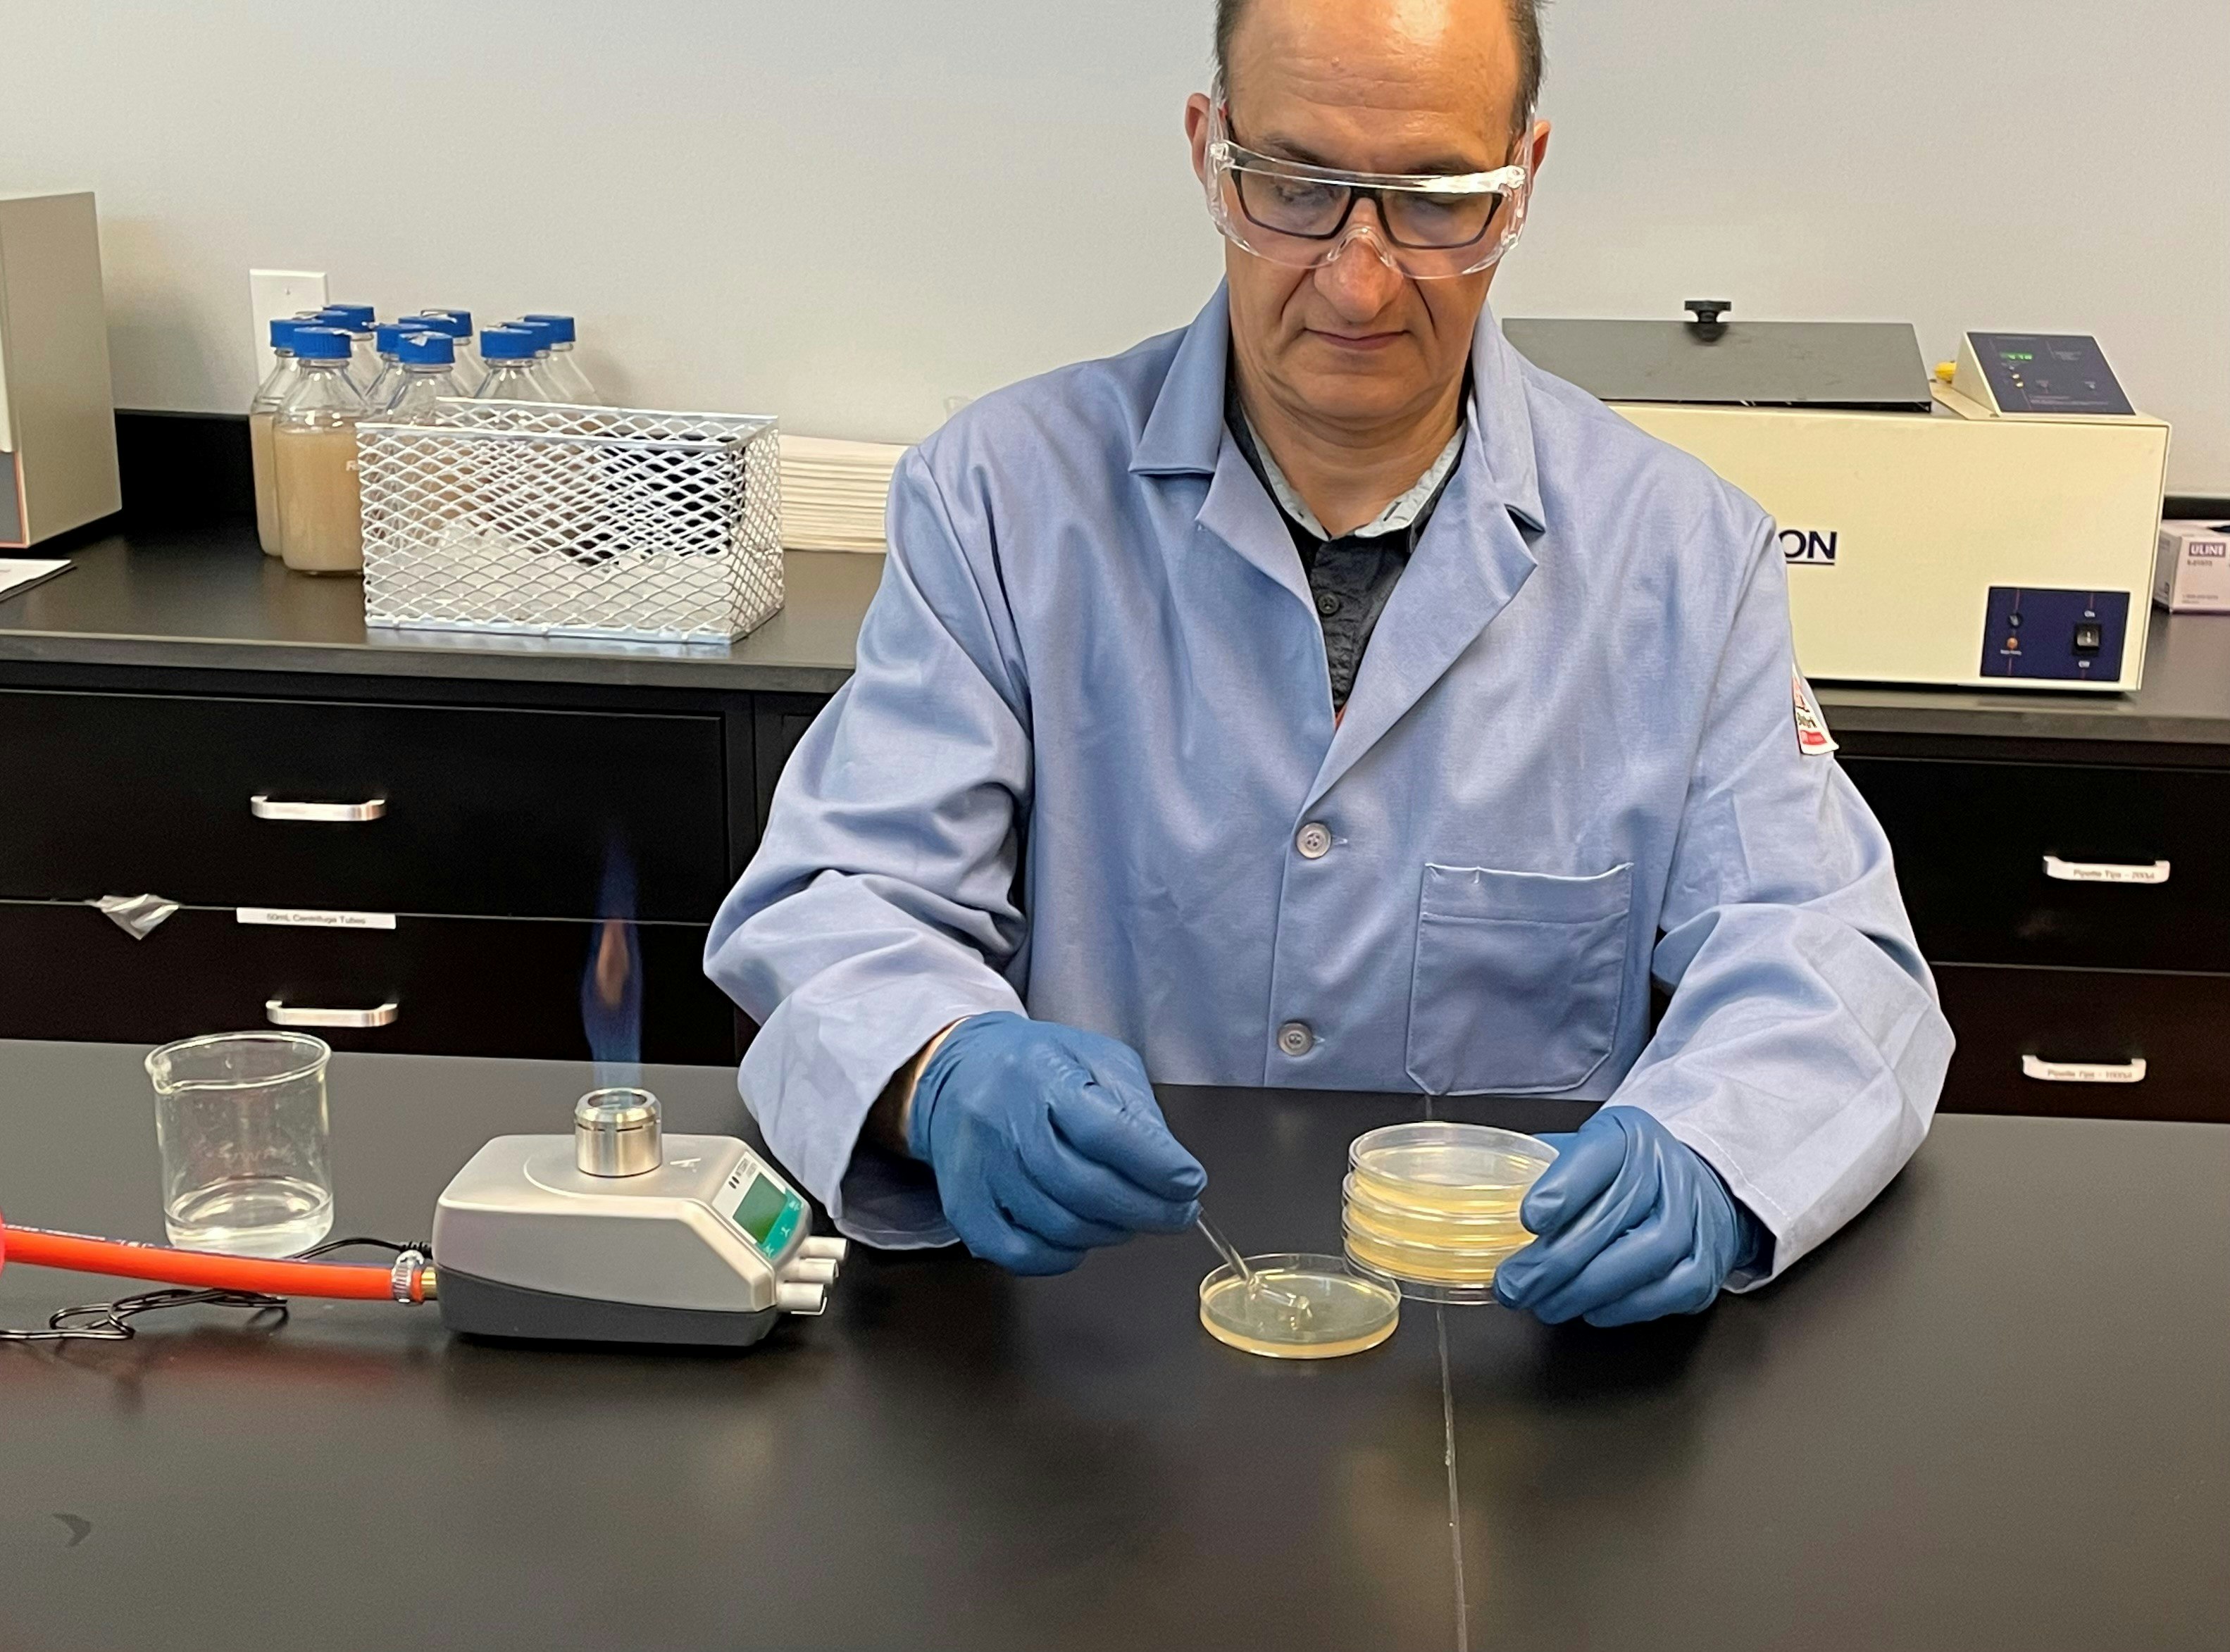 Scientist placing sample in a petri dish